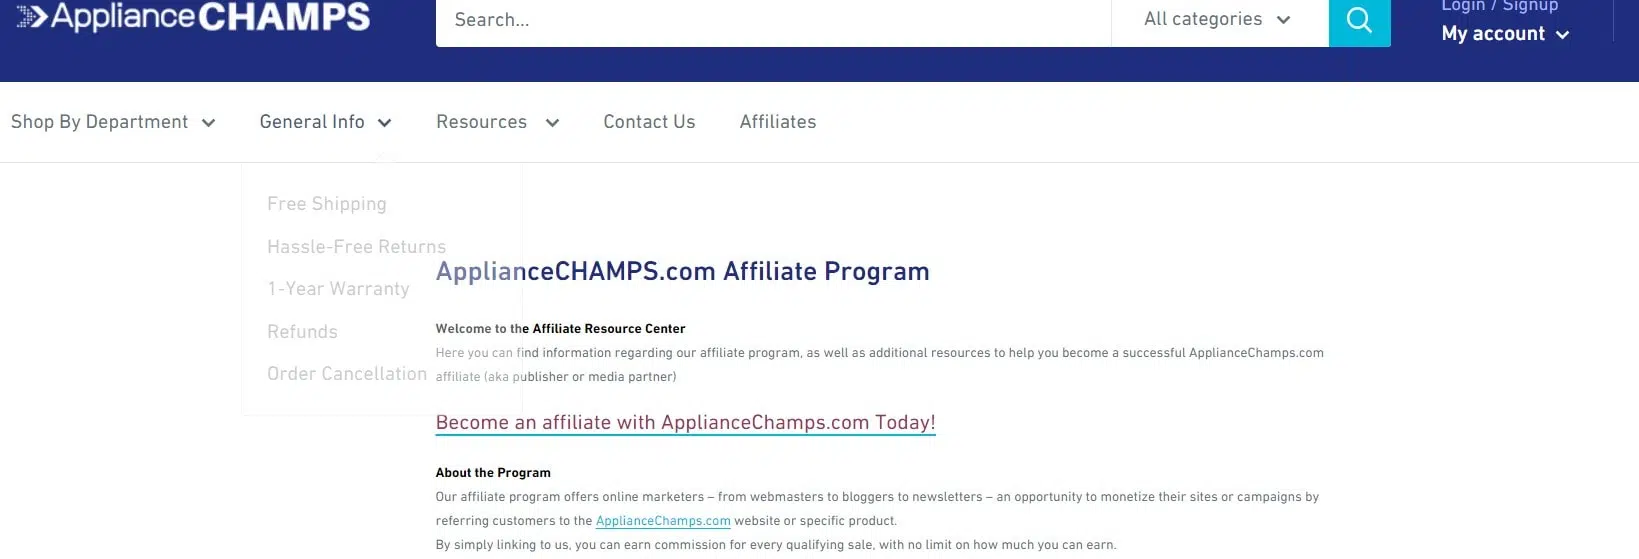 ApplianceCHAMPS affiliate program